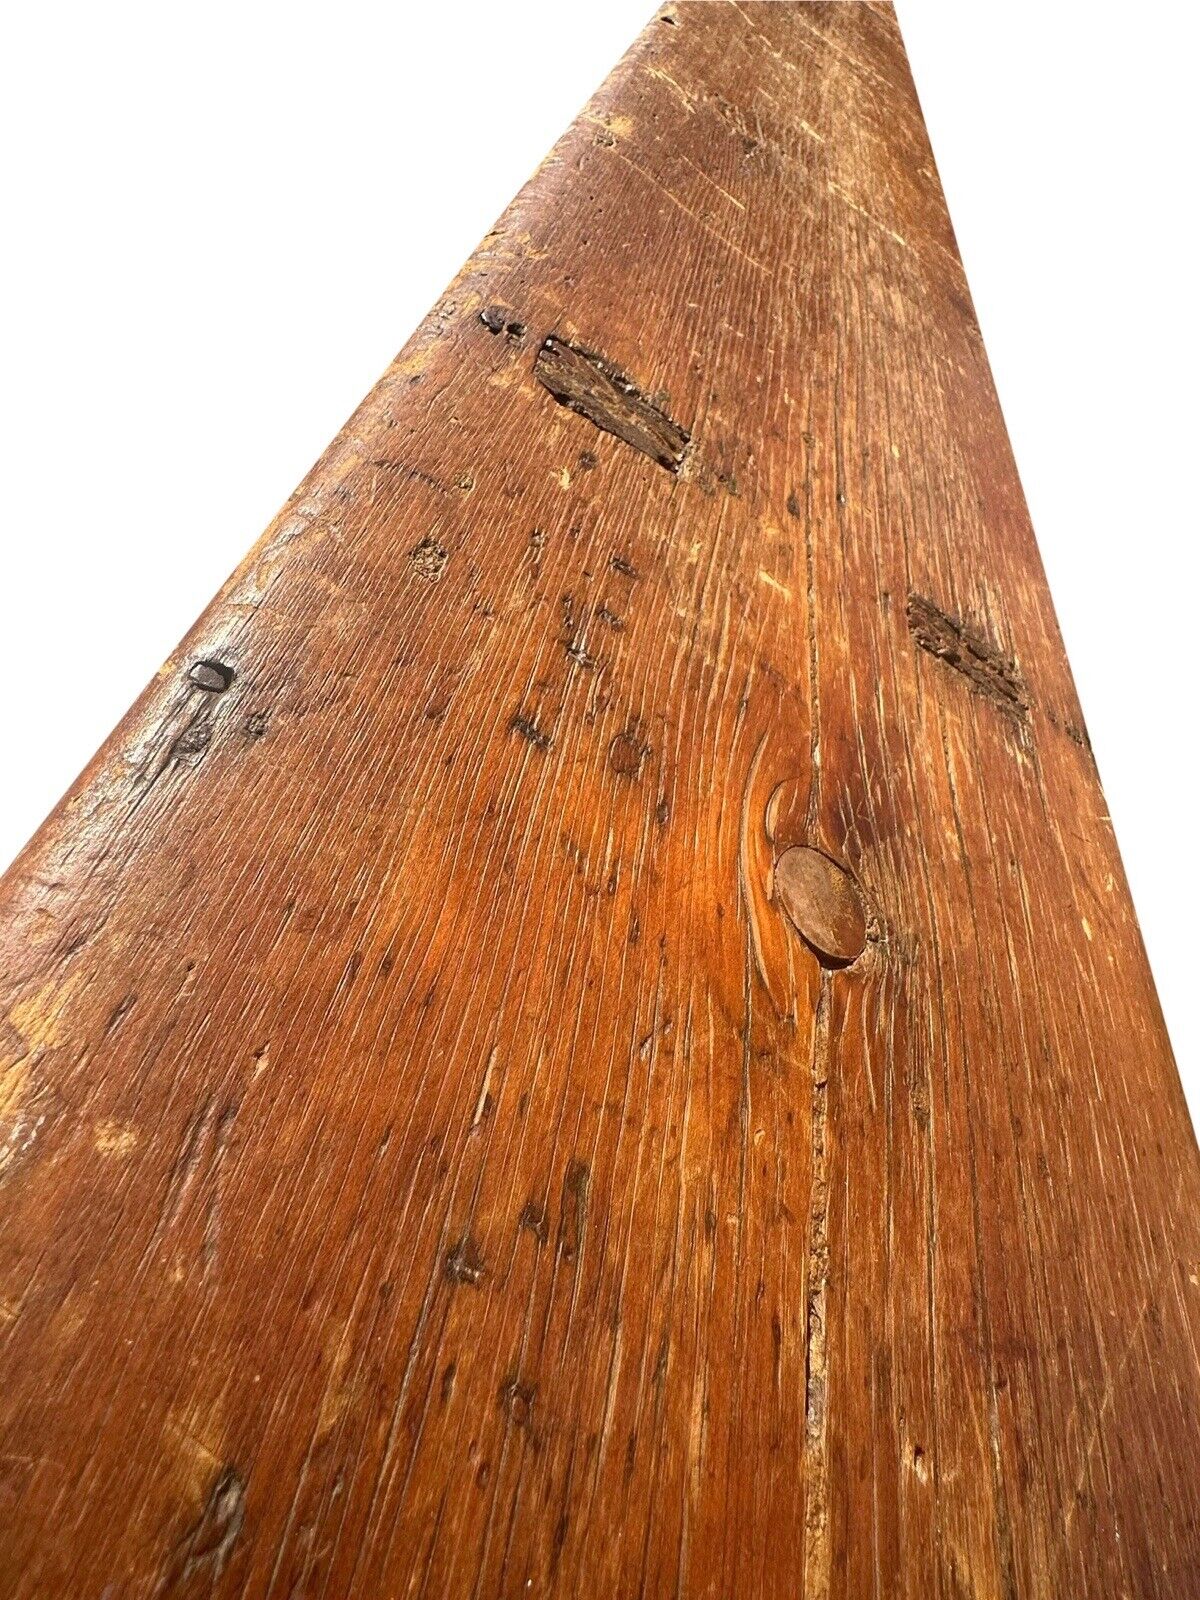 Antique Primitive Pine Nantucket Meetinghouse Bench With Half Moon Cutout Ends